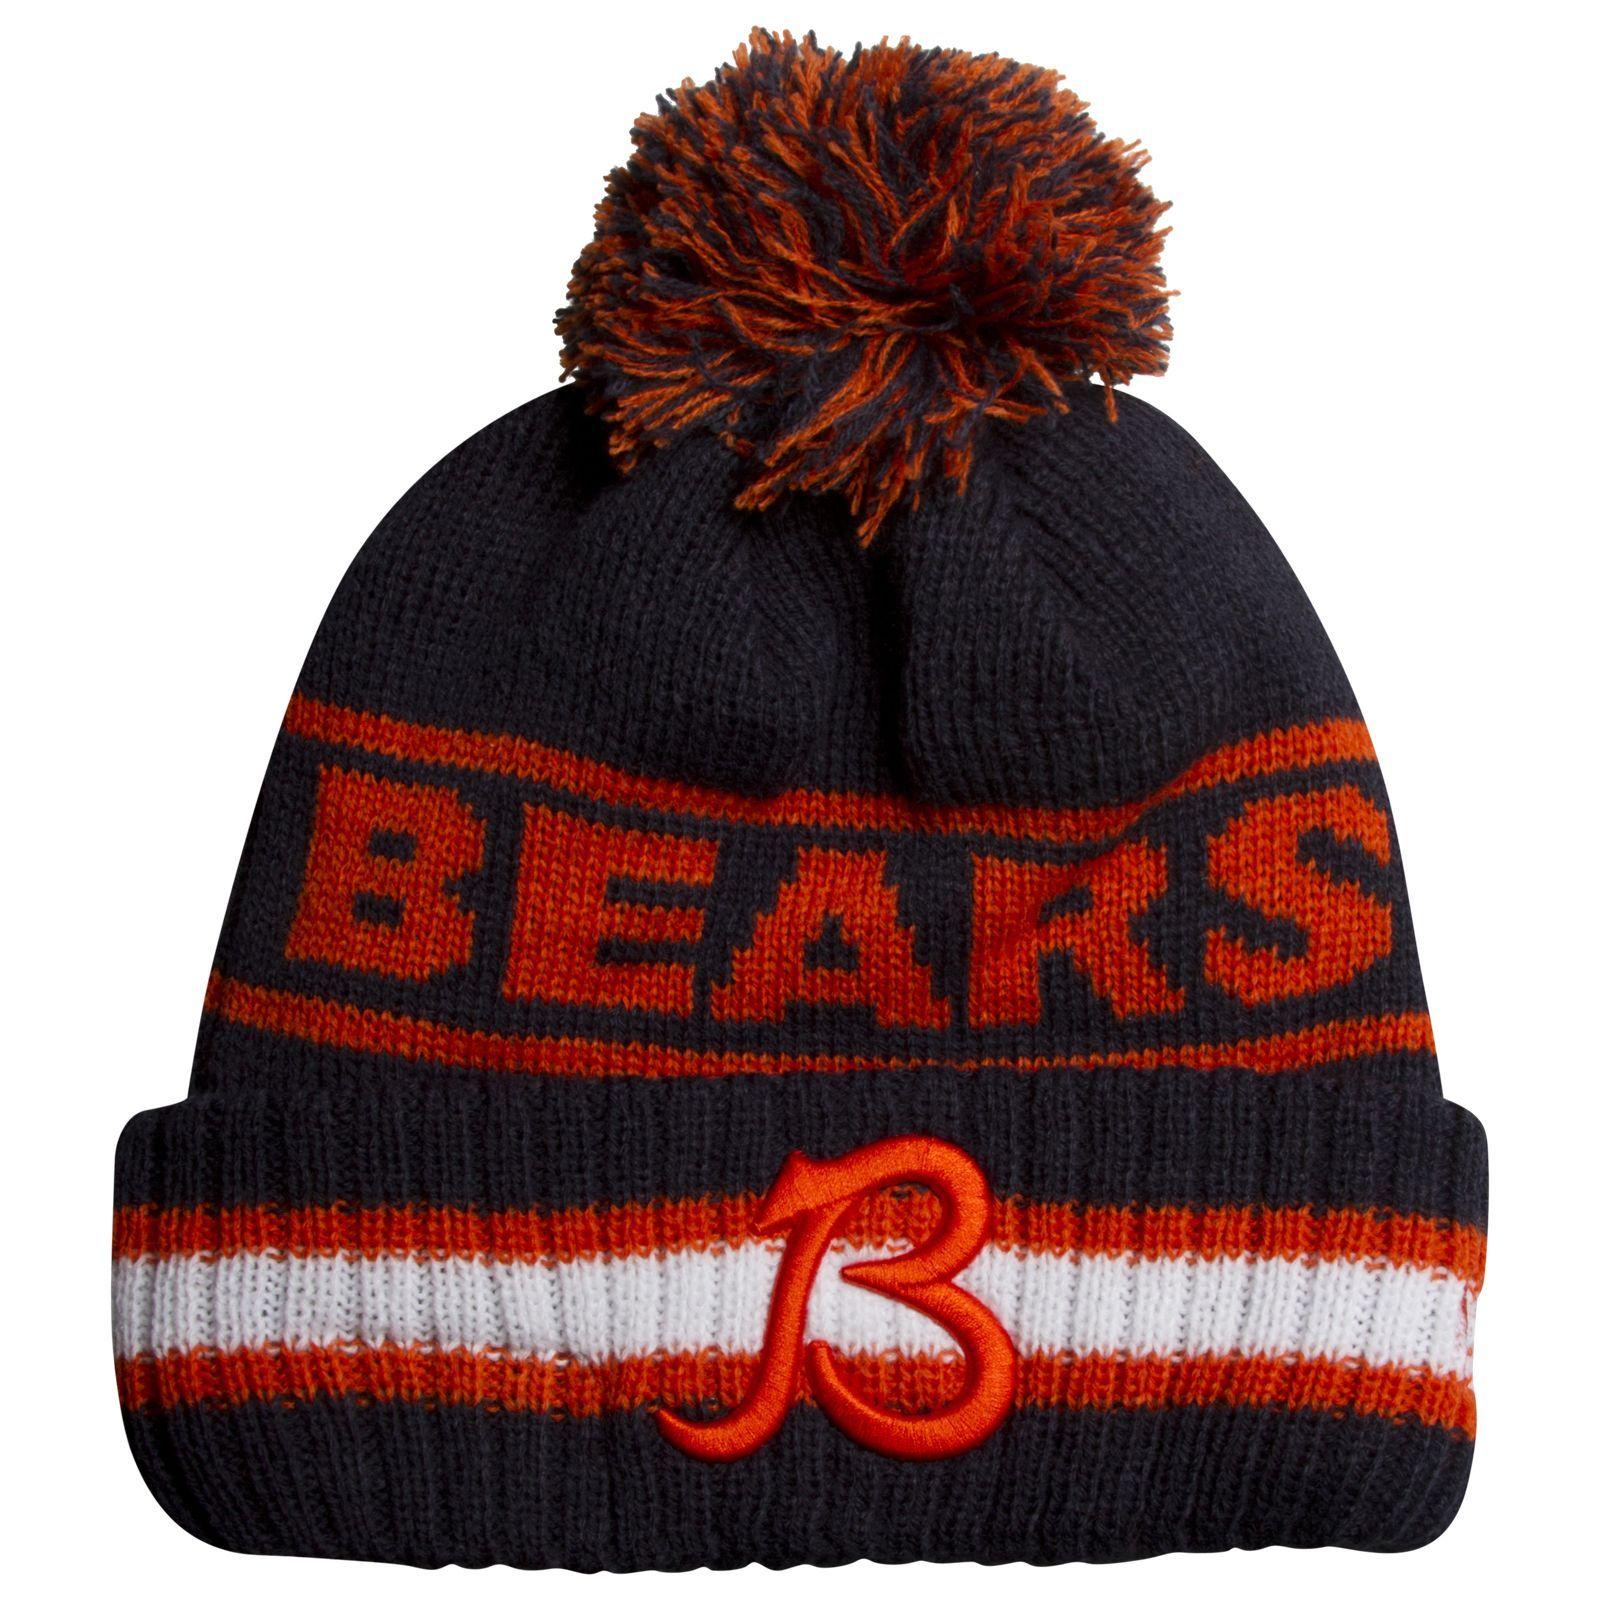 White with Orange B Logo - Chicago Bears Navy, White, and Orange Wordmark and Alternate B